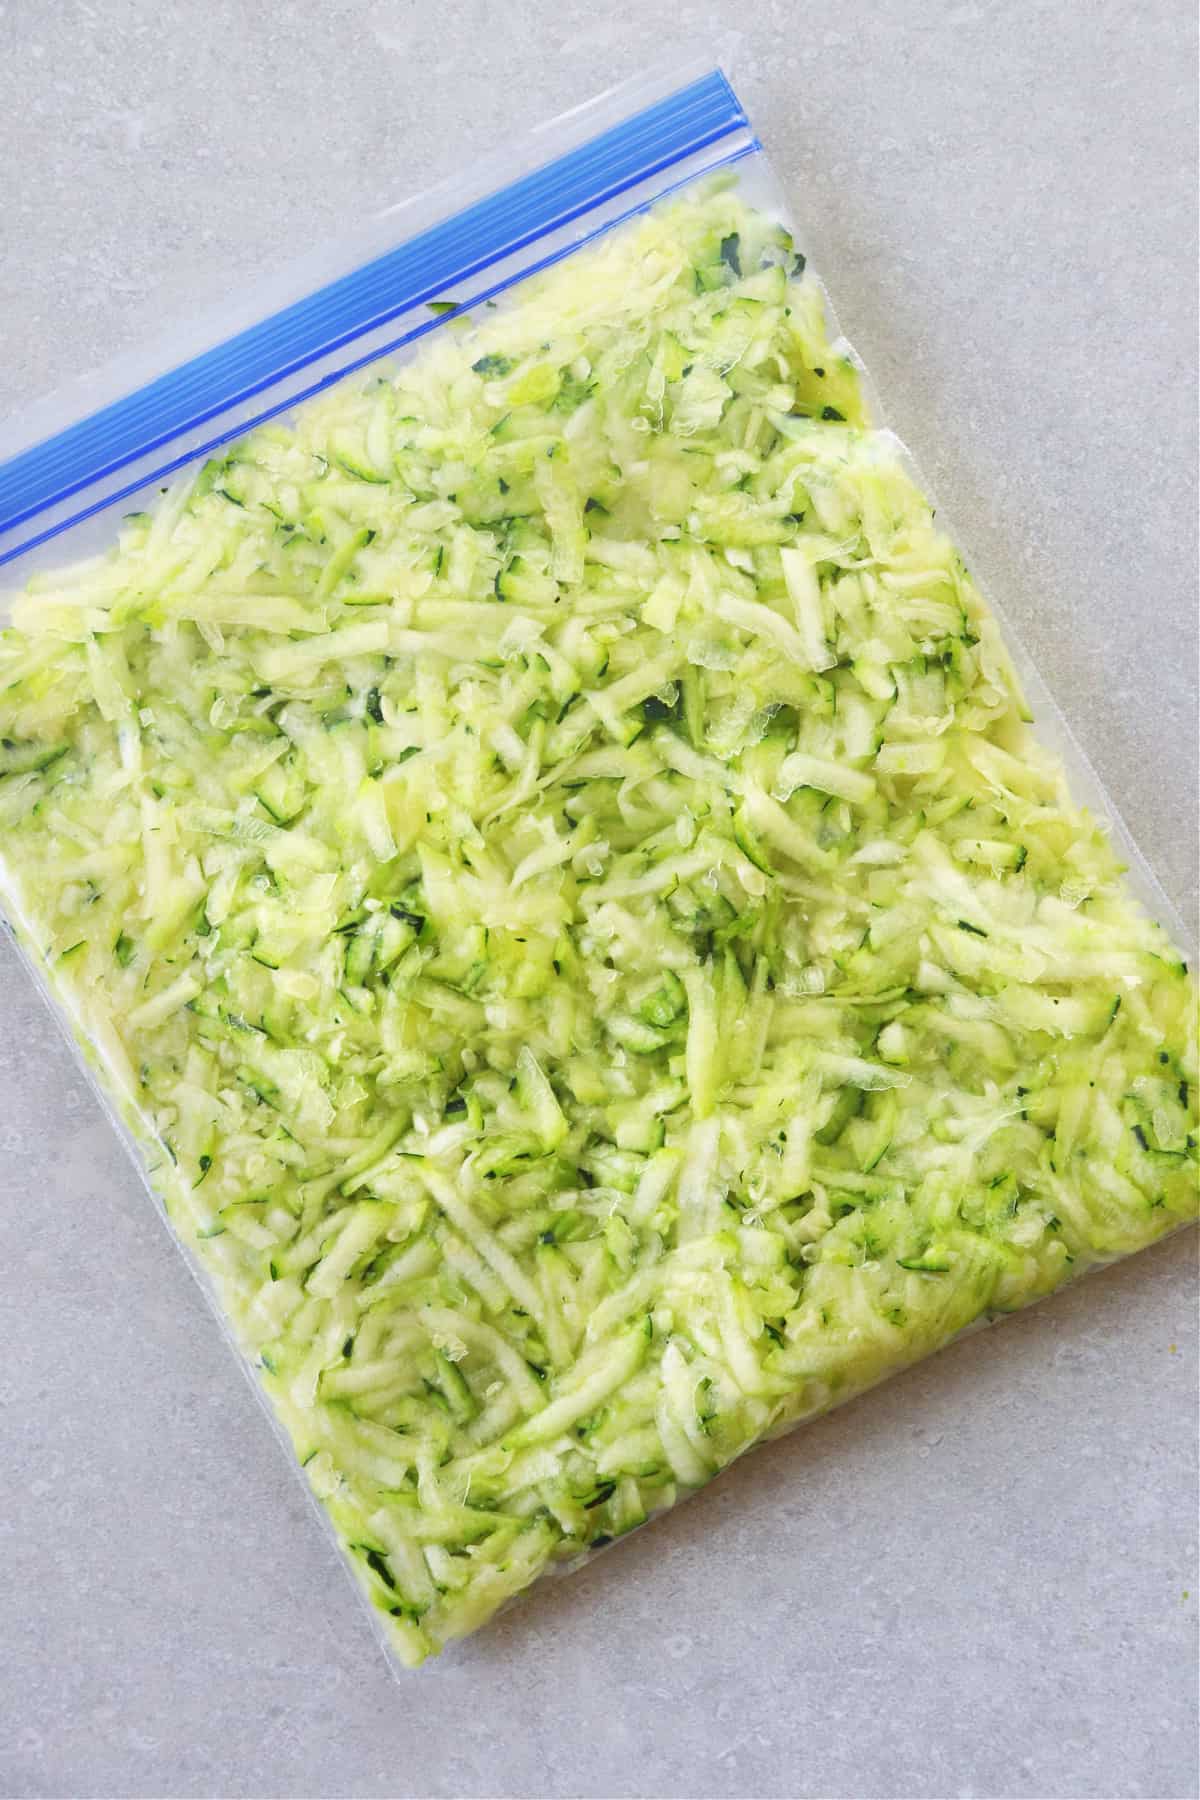 Shredded zucchini in a freezer bag.